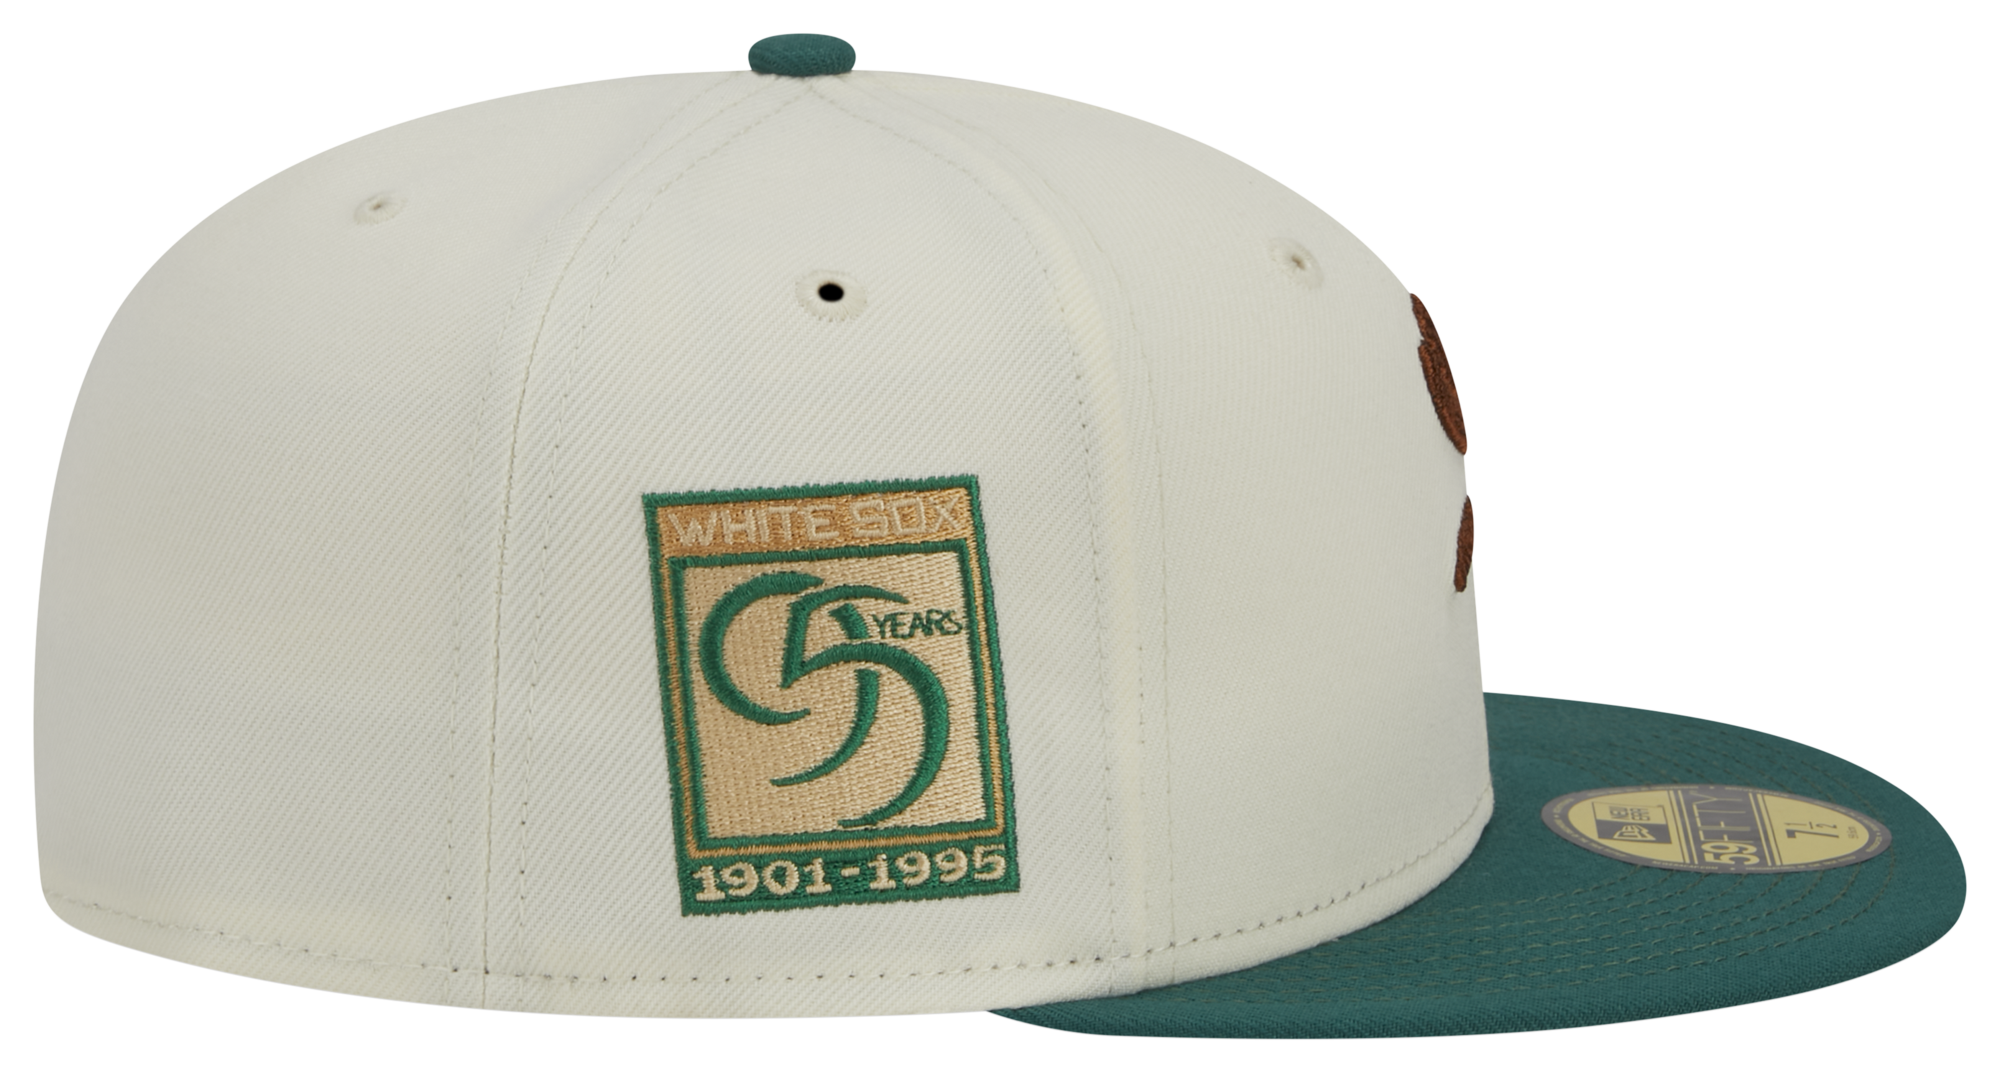 New Era White Sox Camp SP Cap